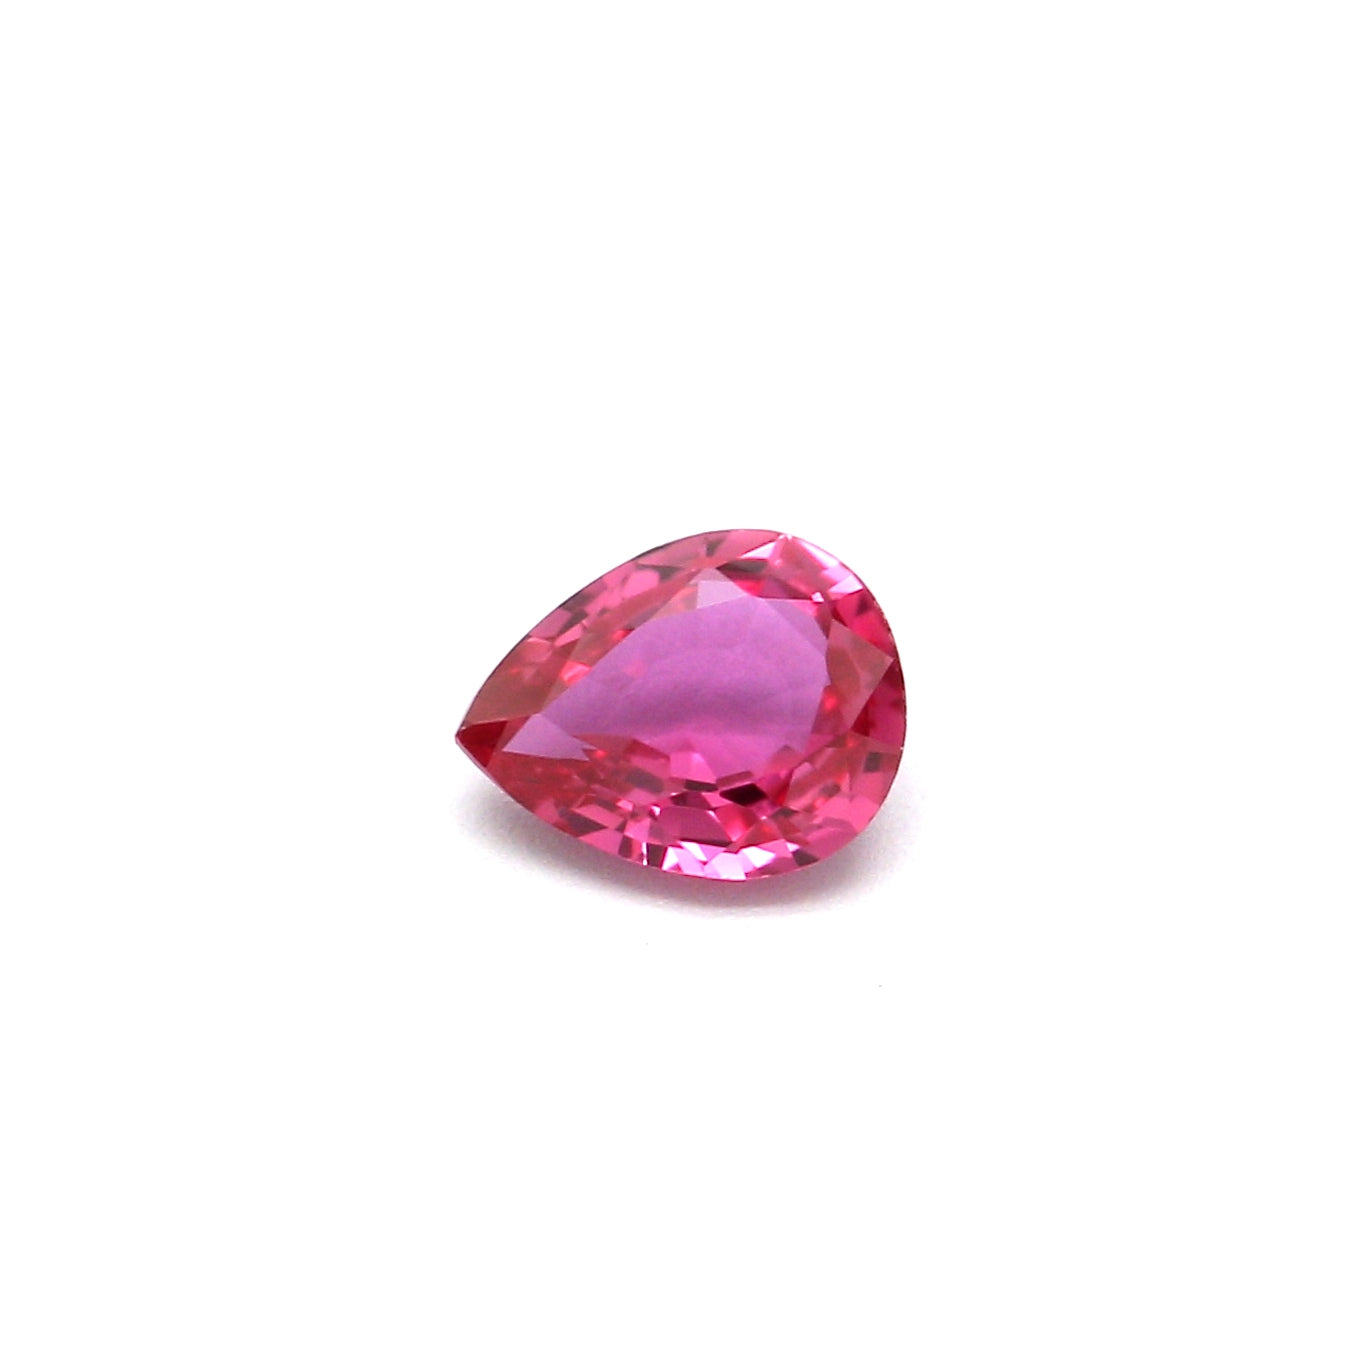 0.31ct Pink, Pear Shape Sapphire, Heated, Thailand - 4.95 x 3.87 x 1.92mm